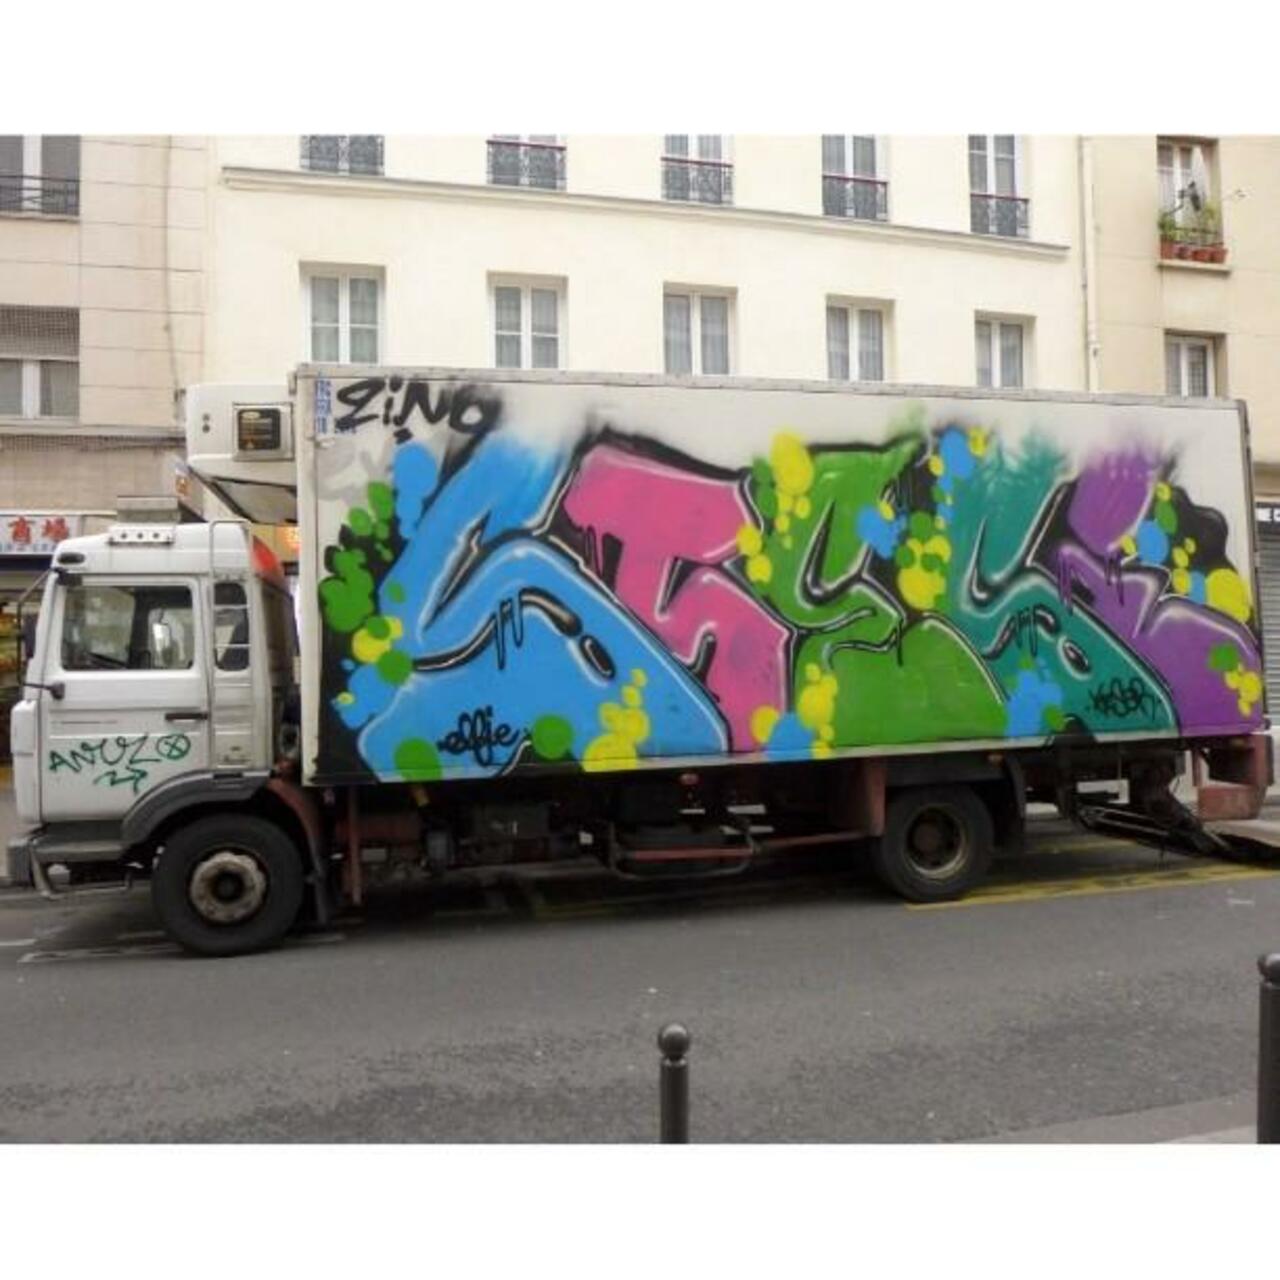 STESI
#camtar #camionsparisiens #trucks_of_art #graffititruck #truckart #streetart #graffiti #graff #art #fatcap #b… http://t.co/NLBYaJKHTx